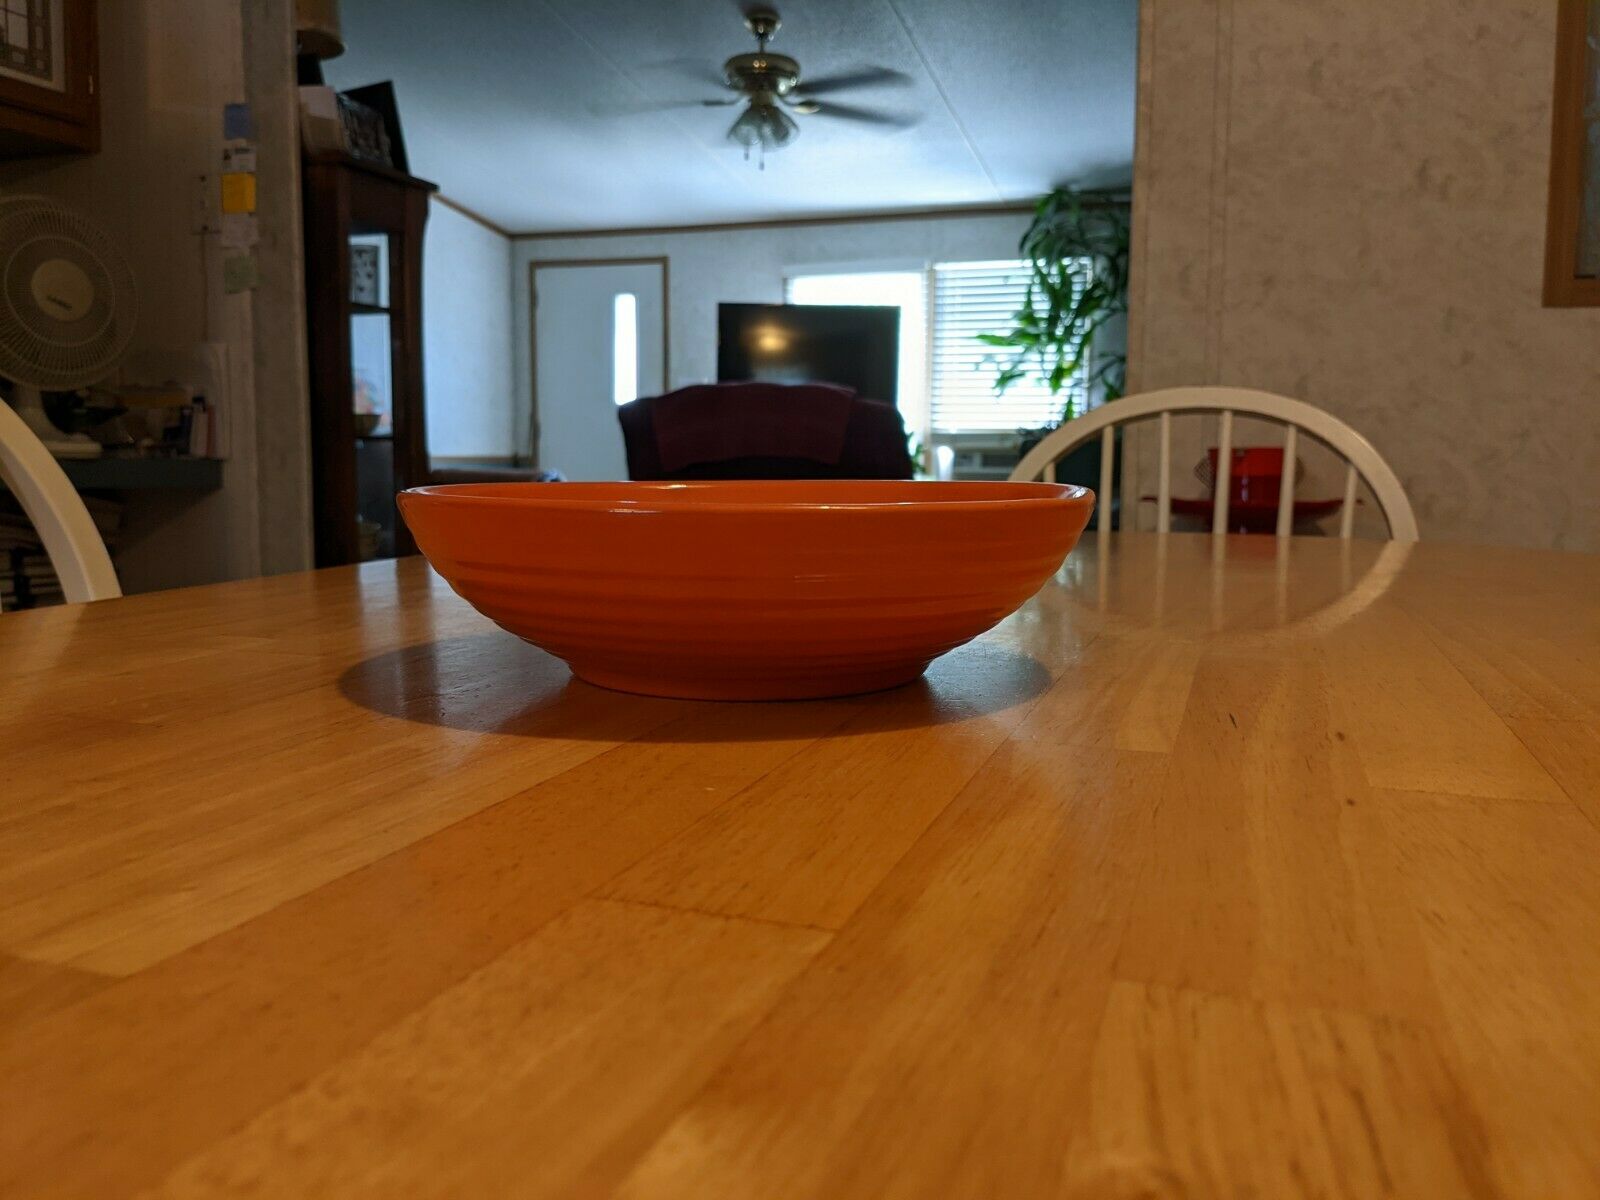 Bauer-orange Ringware-9 1/4" Bowl